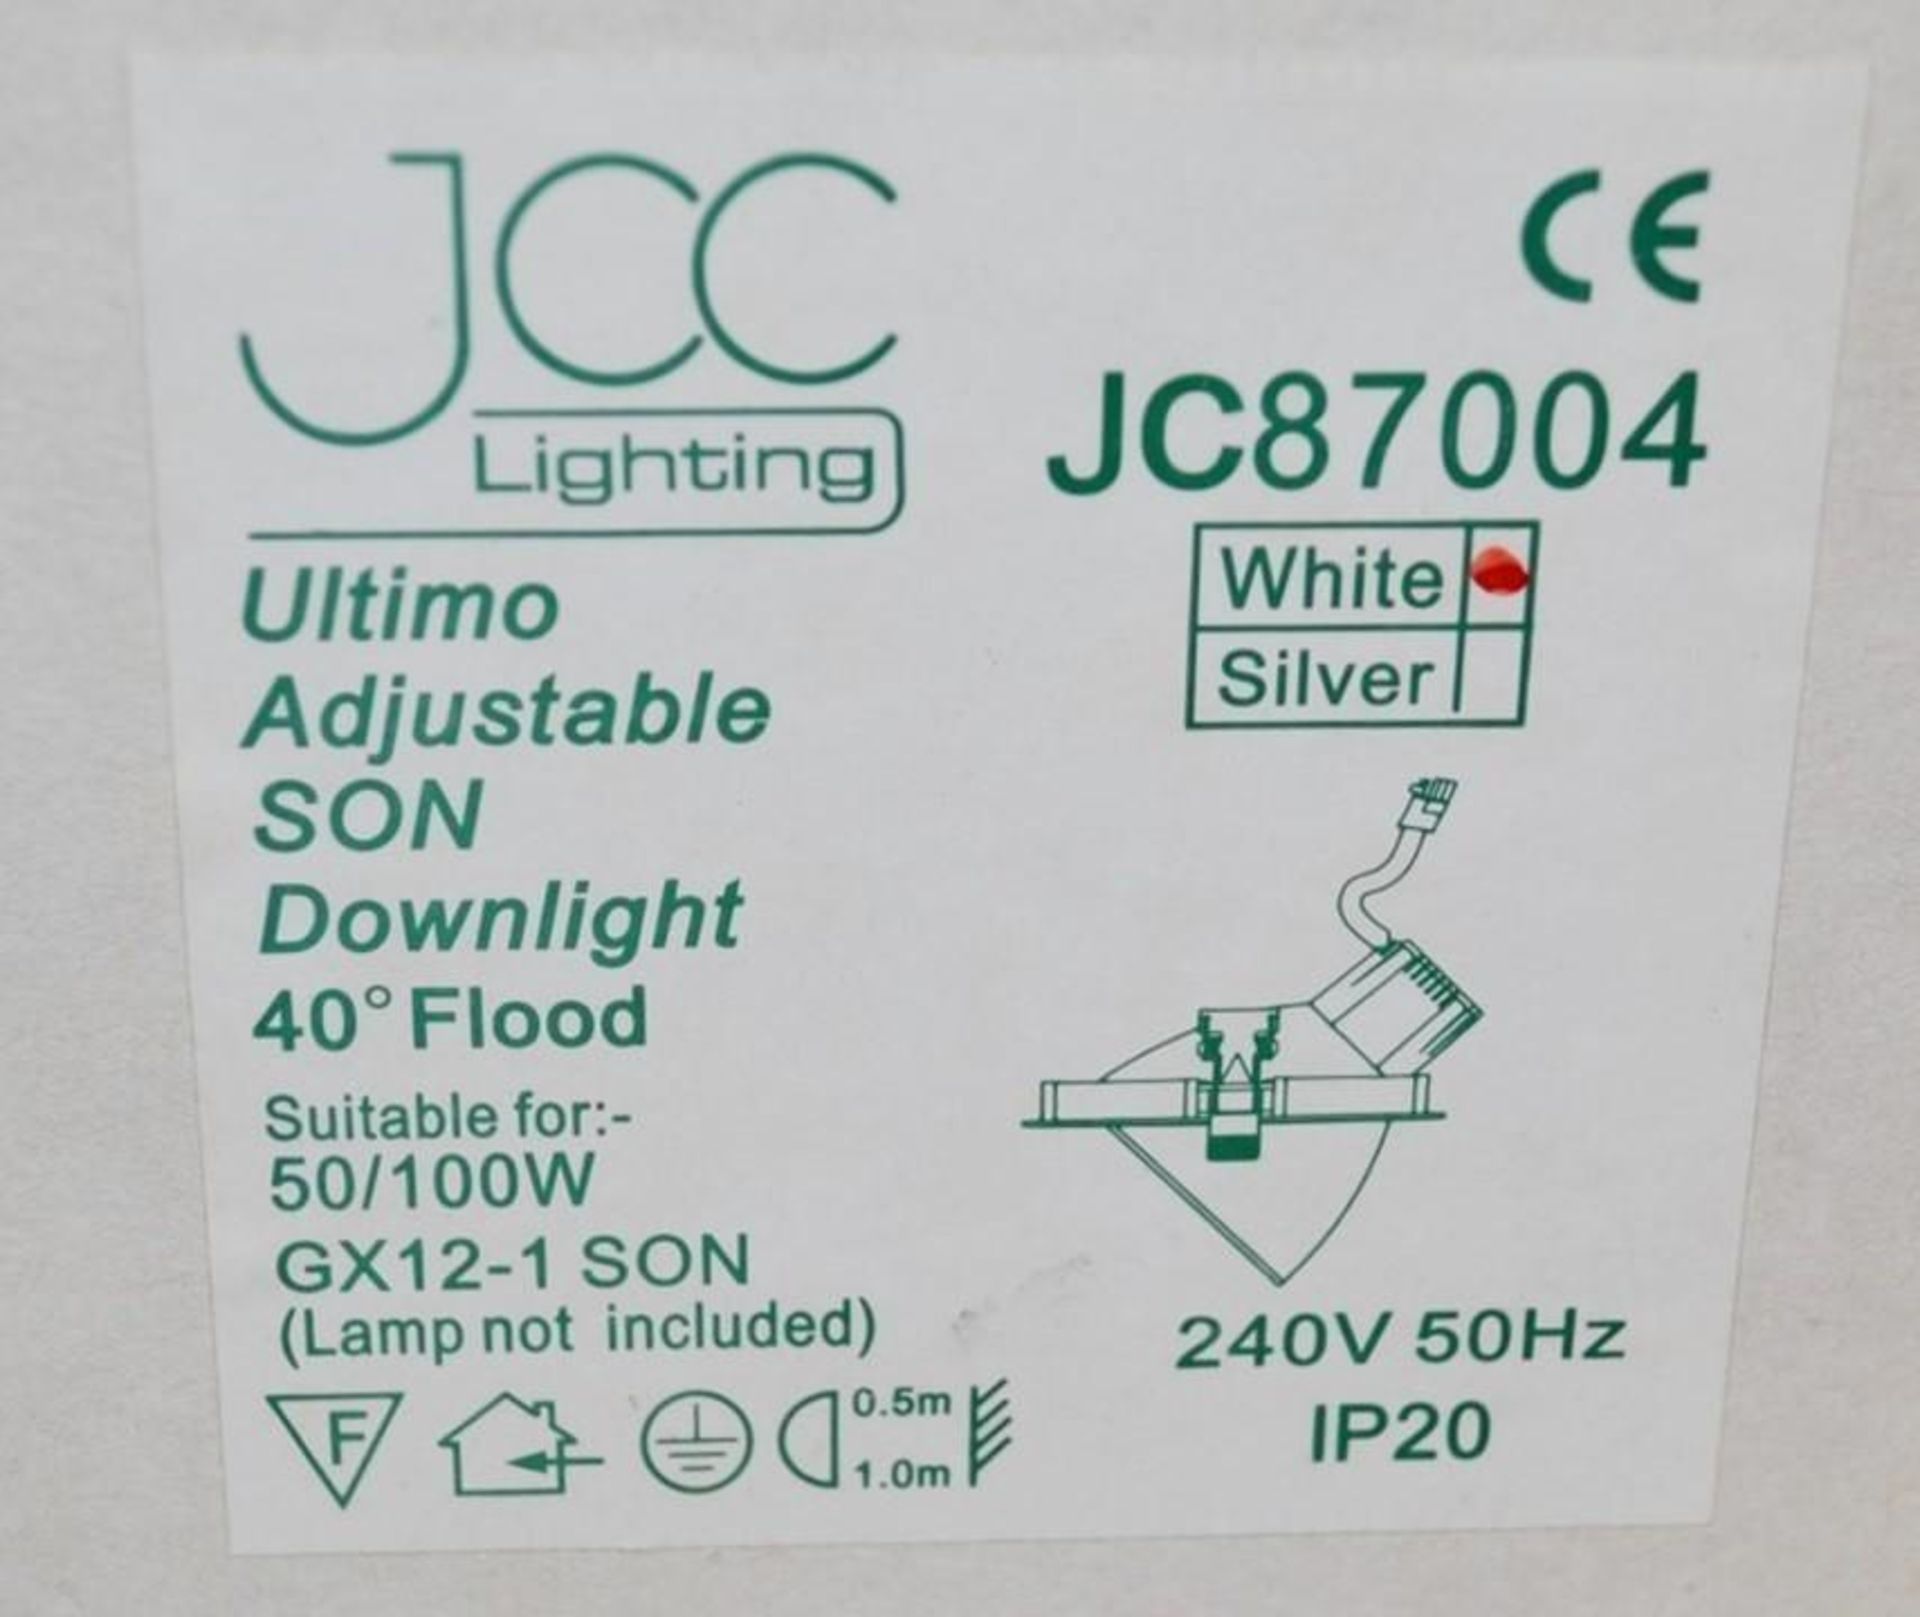 5 x JCC Lighting Ultimo JC87004 Adjustable Downlights - High Performance Downlight - Colour: White - - Image 3 of 6